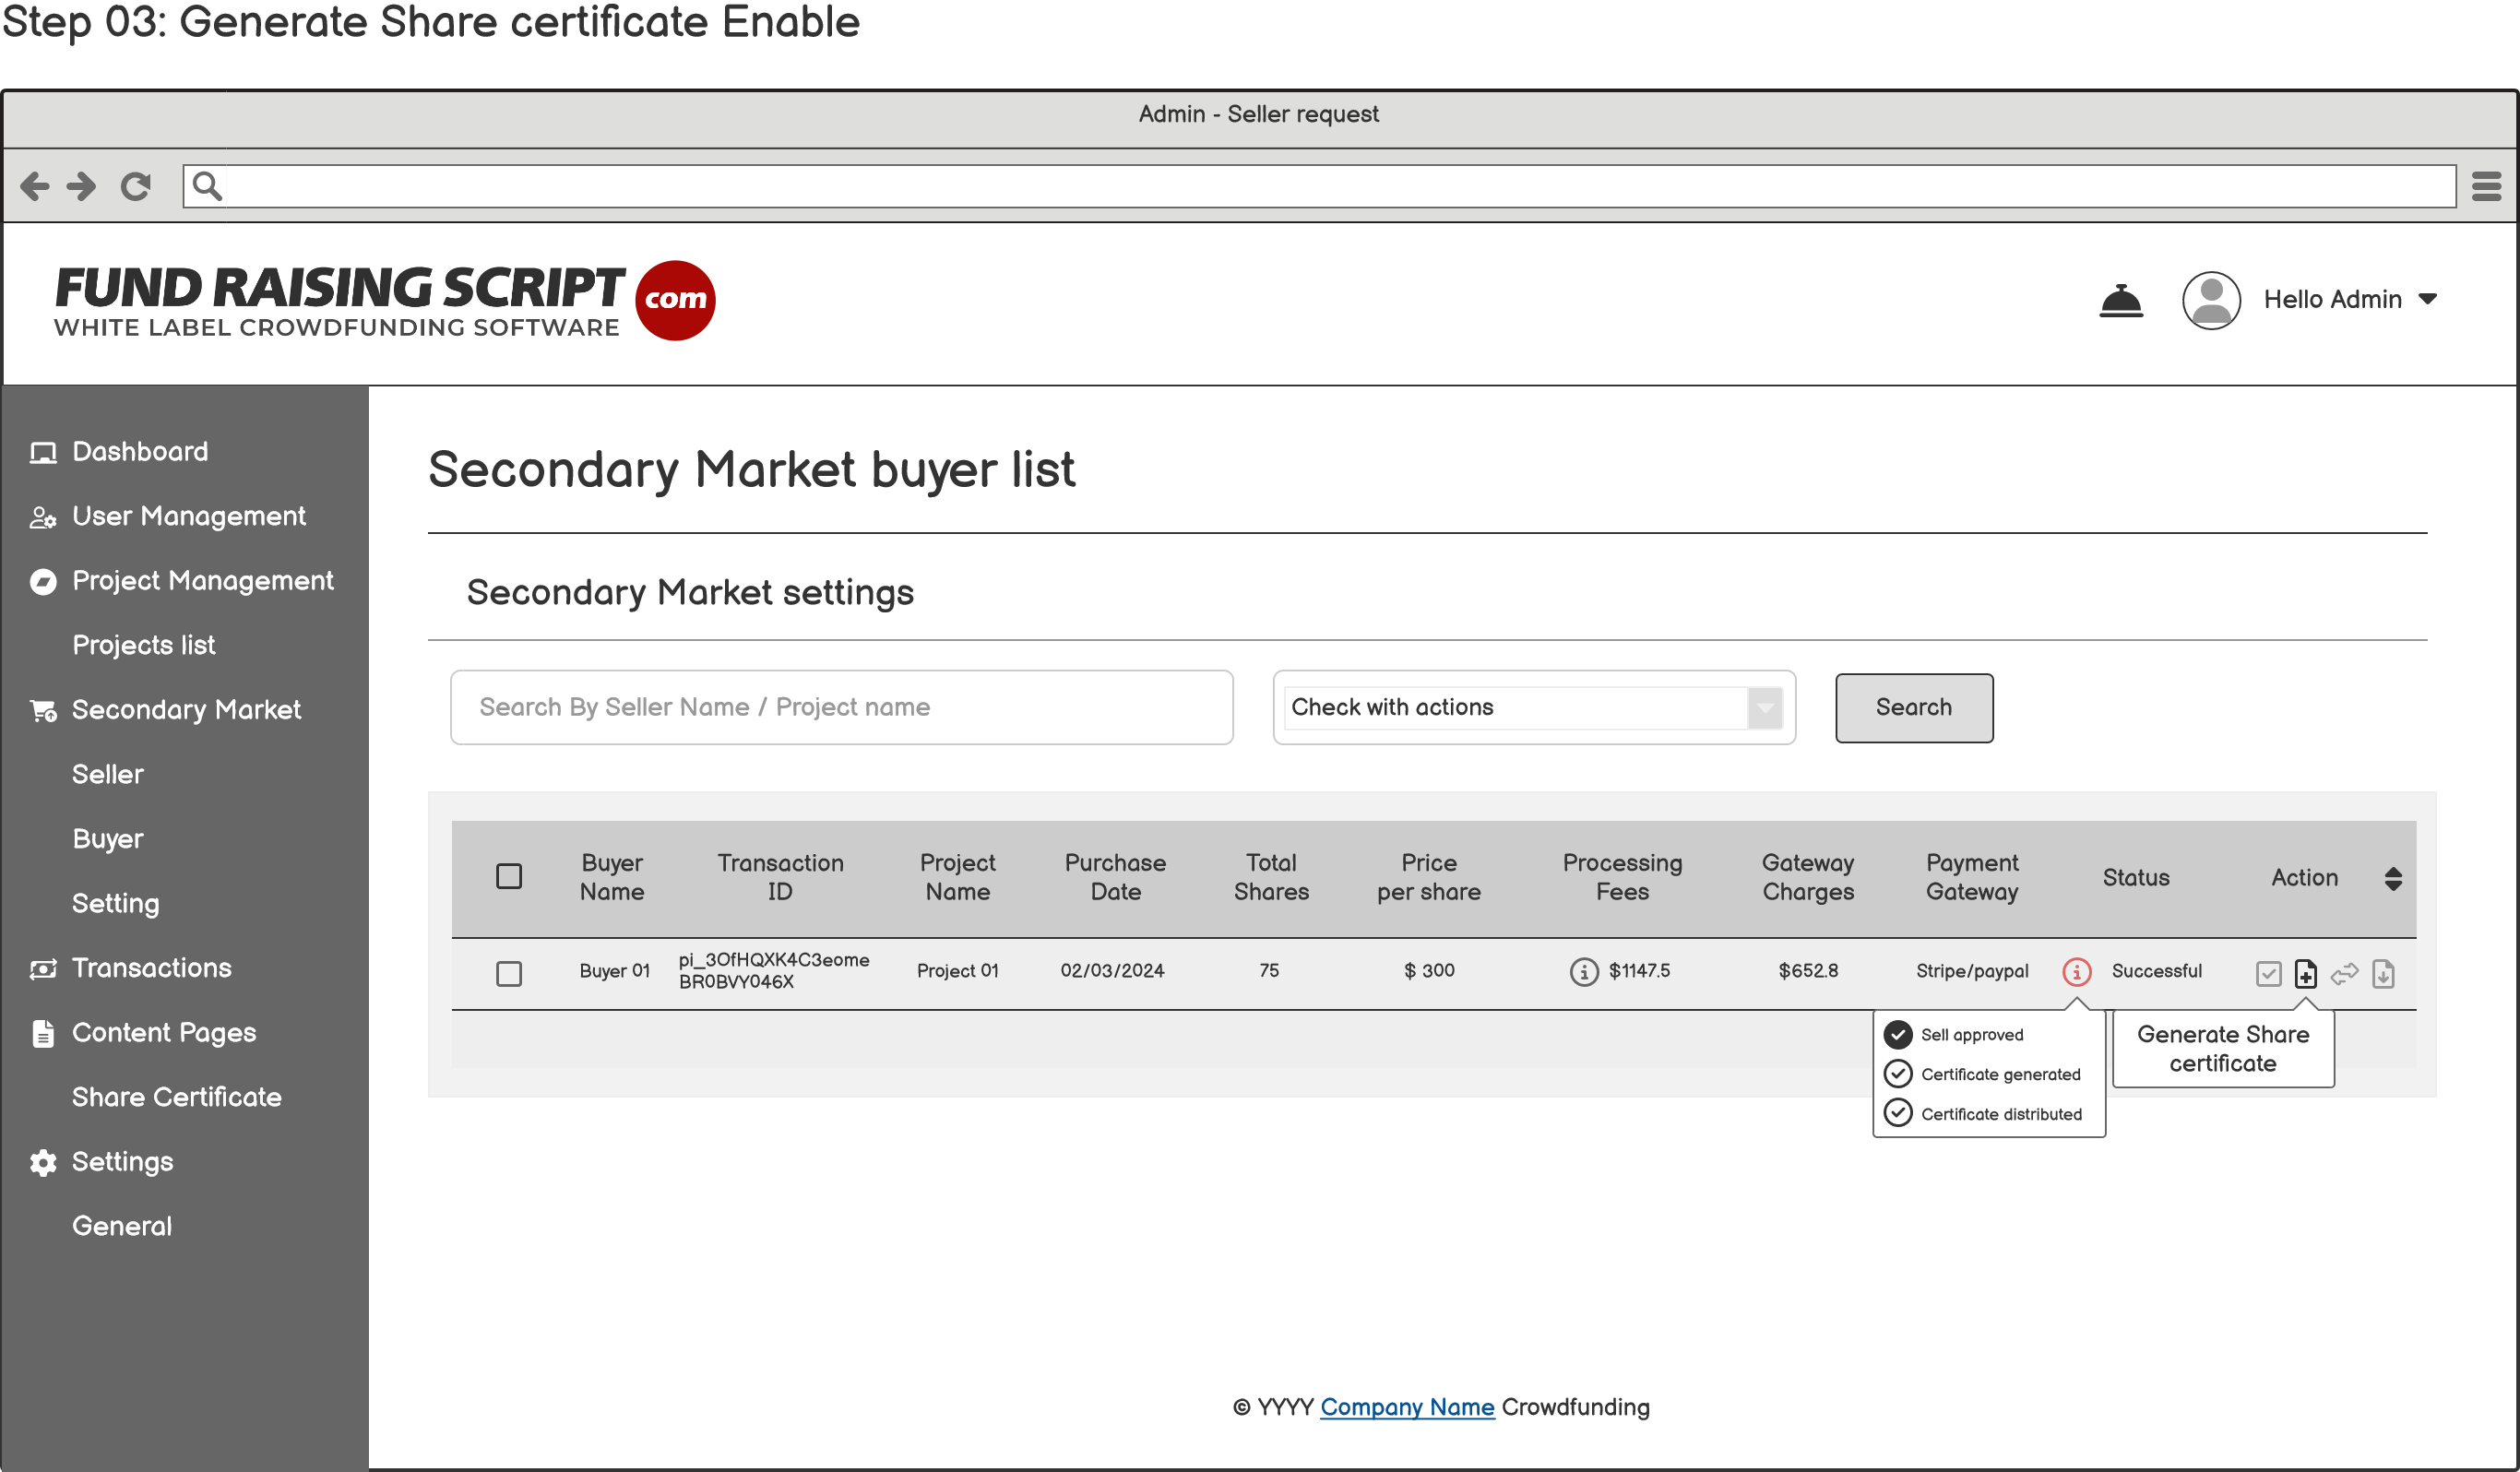 8.0.2 Buyer list Enable certificate generate